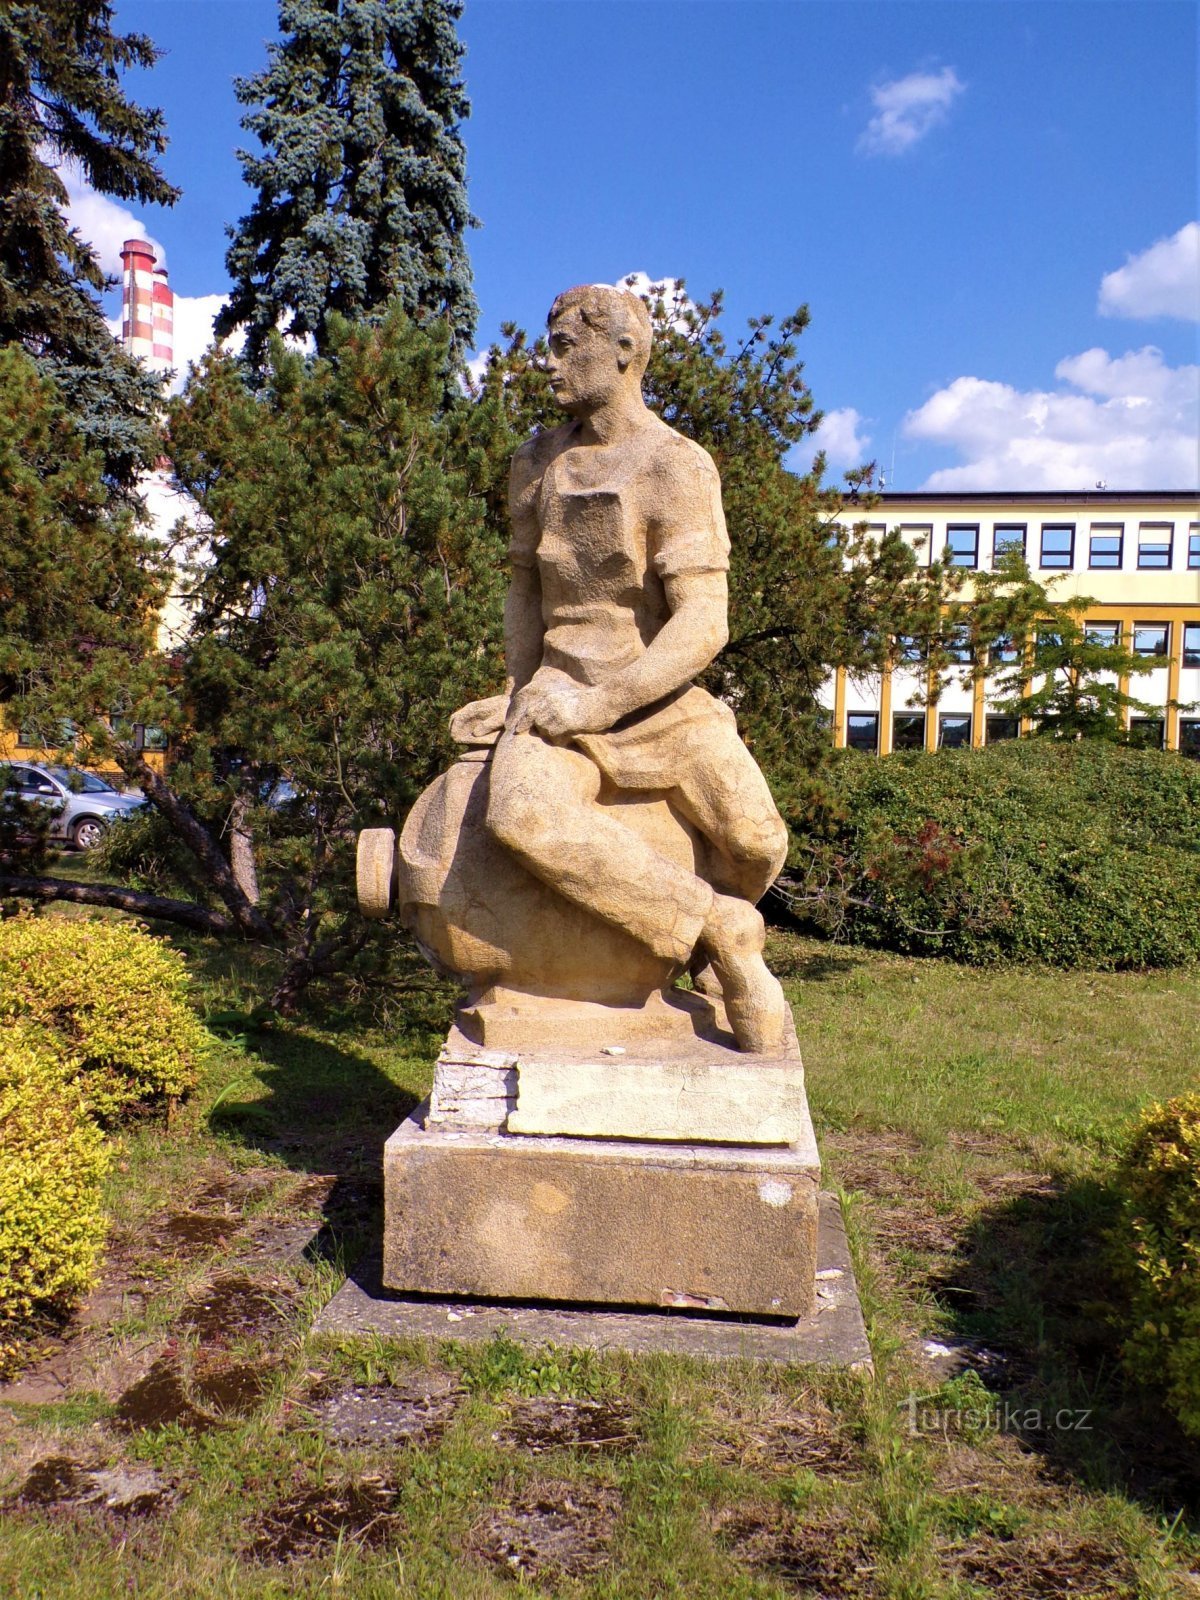 Statue foran Opatovice nad Labem kraftværk (29.9.2017. september XNUMX)